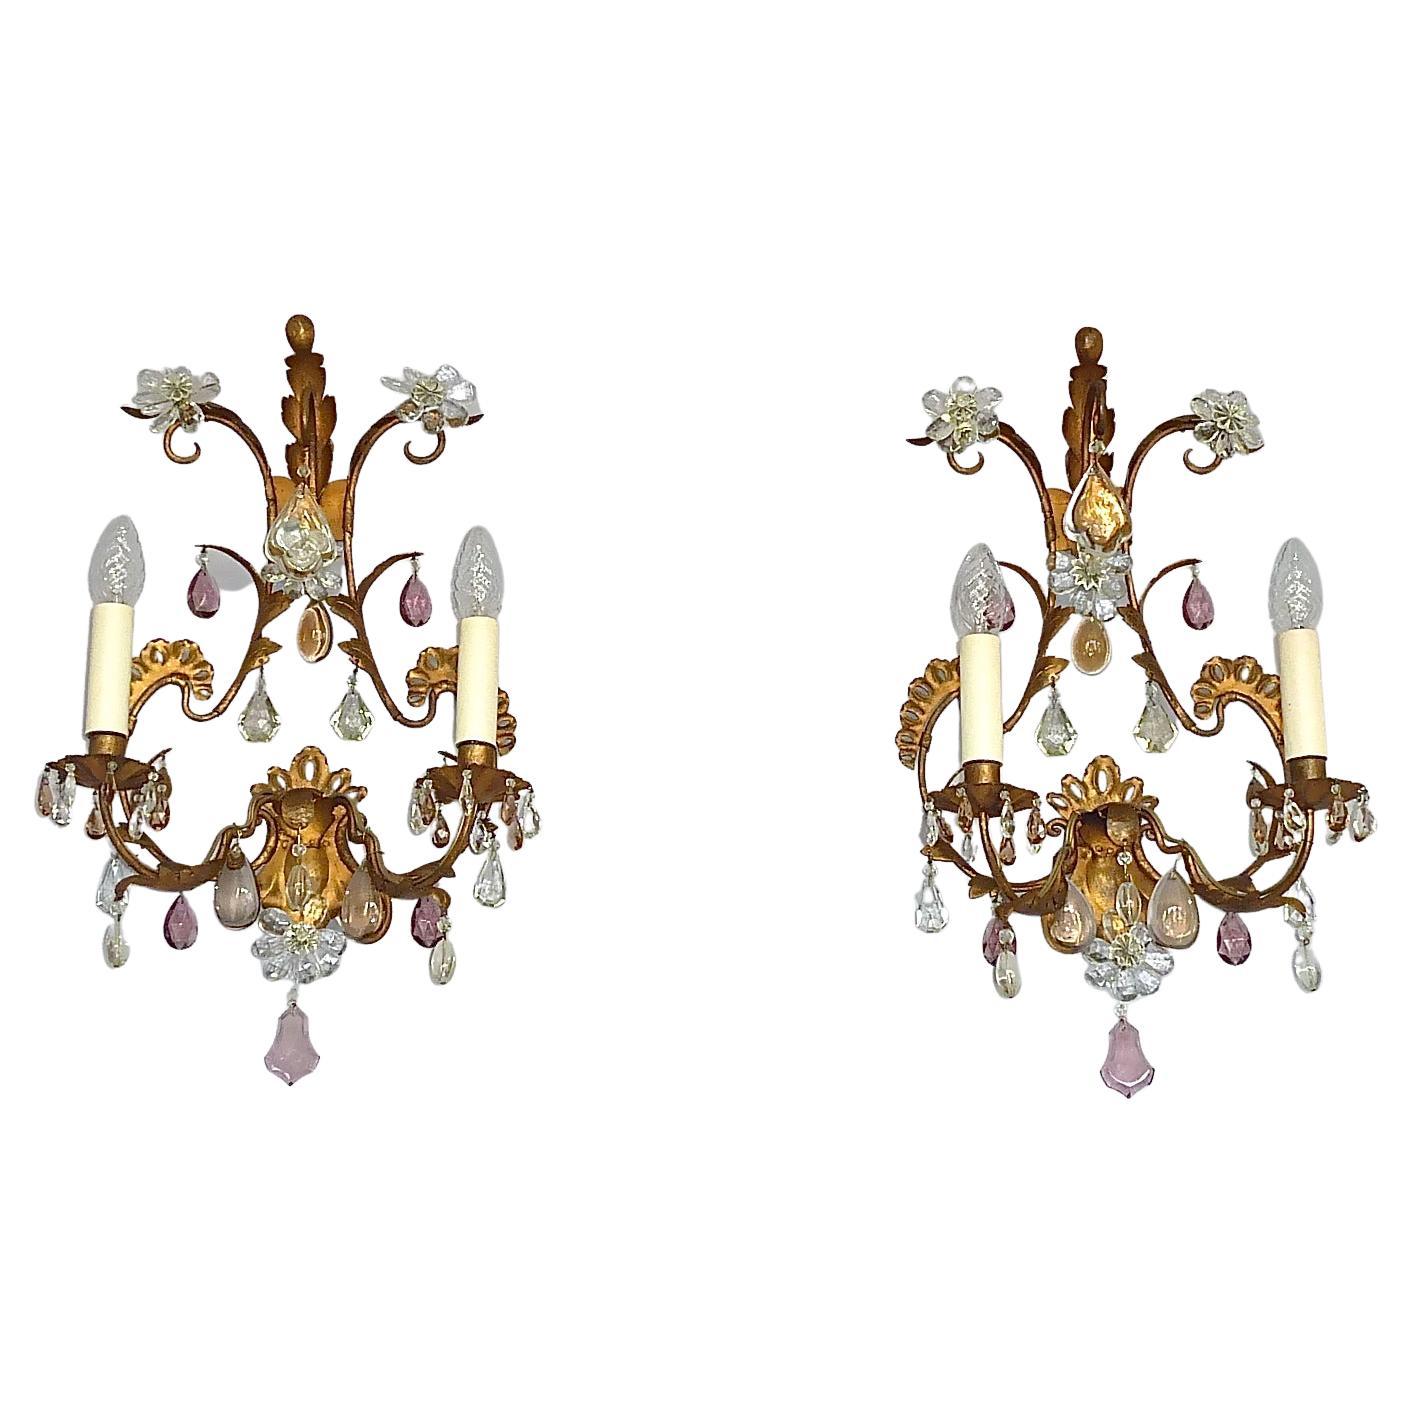 Großes Paar vergoldet Maison Baguès Stil Blume Blatt Wandleuchter Facettiert Kristallglas im Angebot